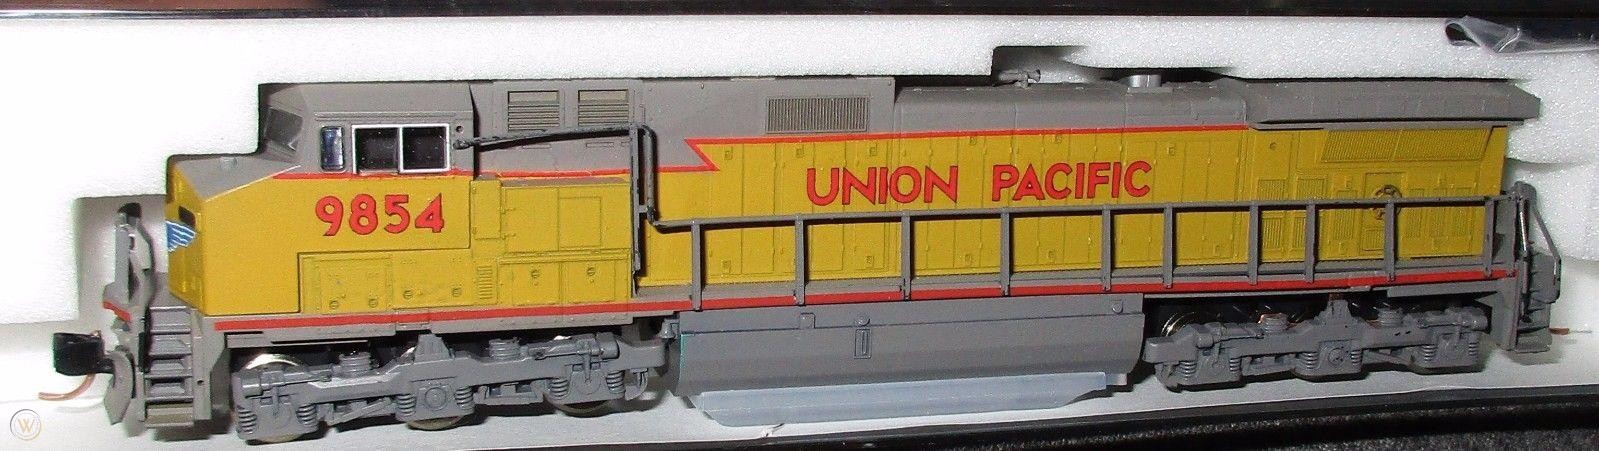 N Scale - Dream Designs - UP 5854 - Locomotive, Diesel, GE C44-9W - Union Pacific - 9854